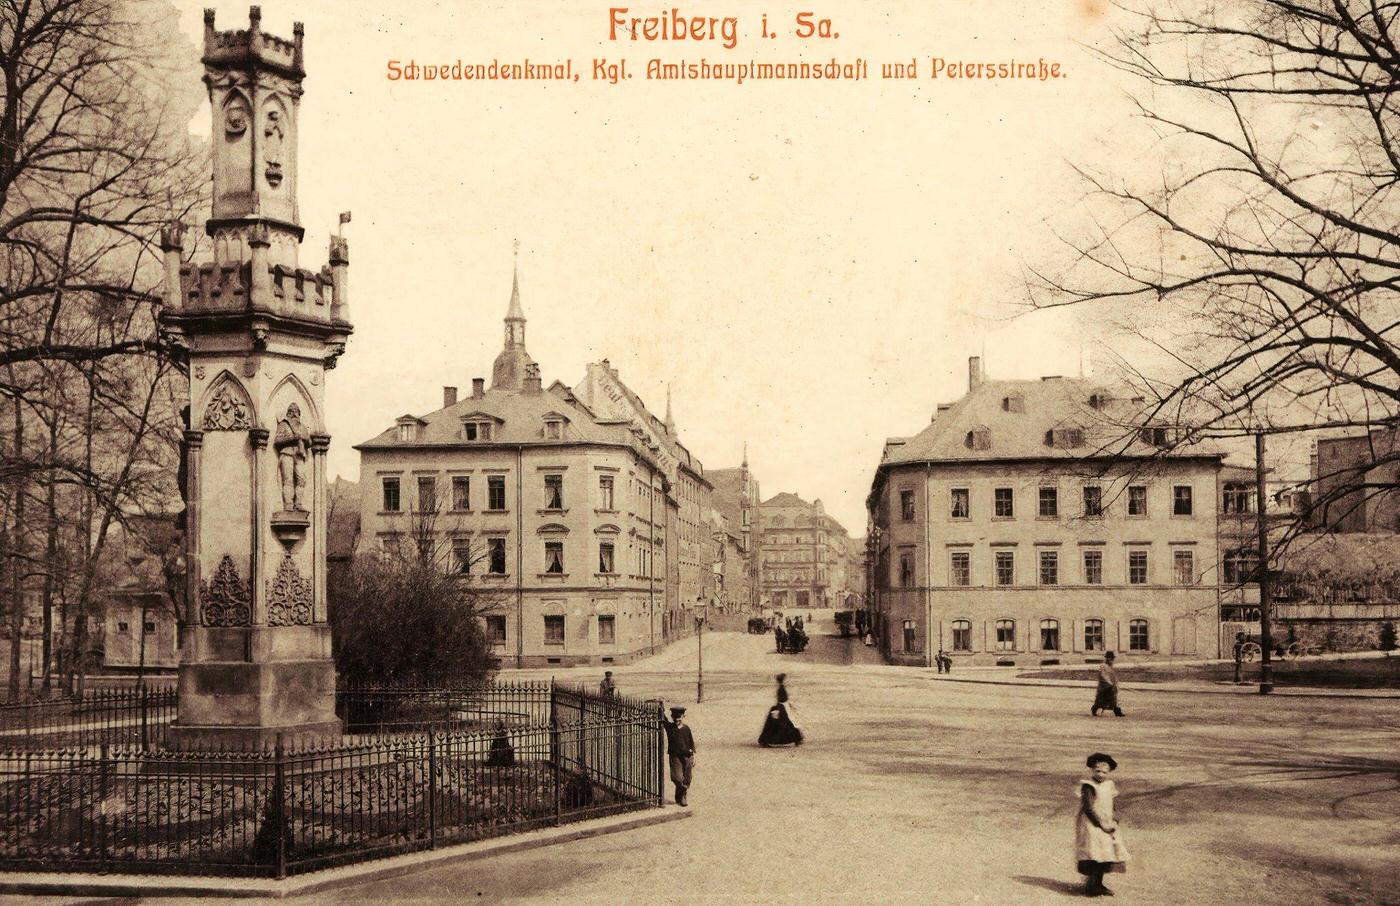 Monuments in Landkreis Mittelsachsen, Freiberg, Germany, 1903.